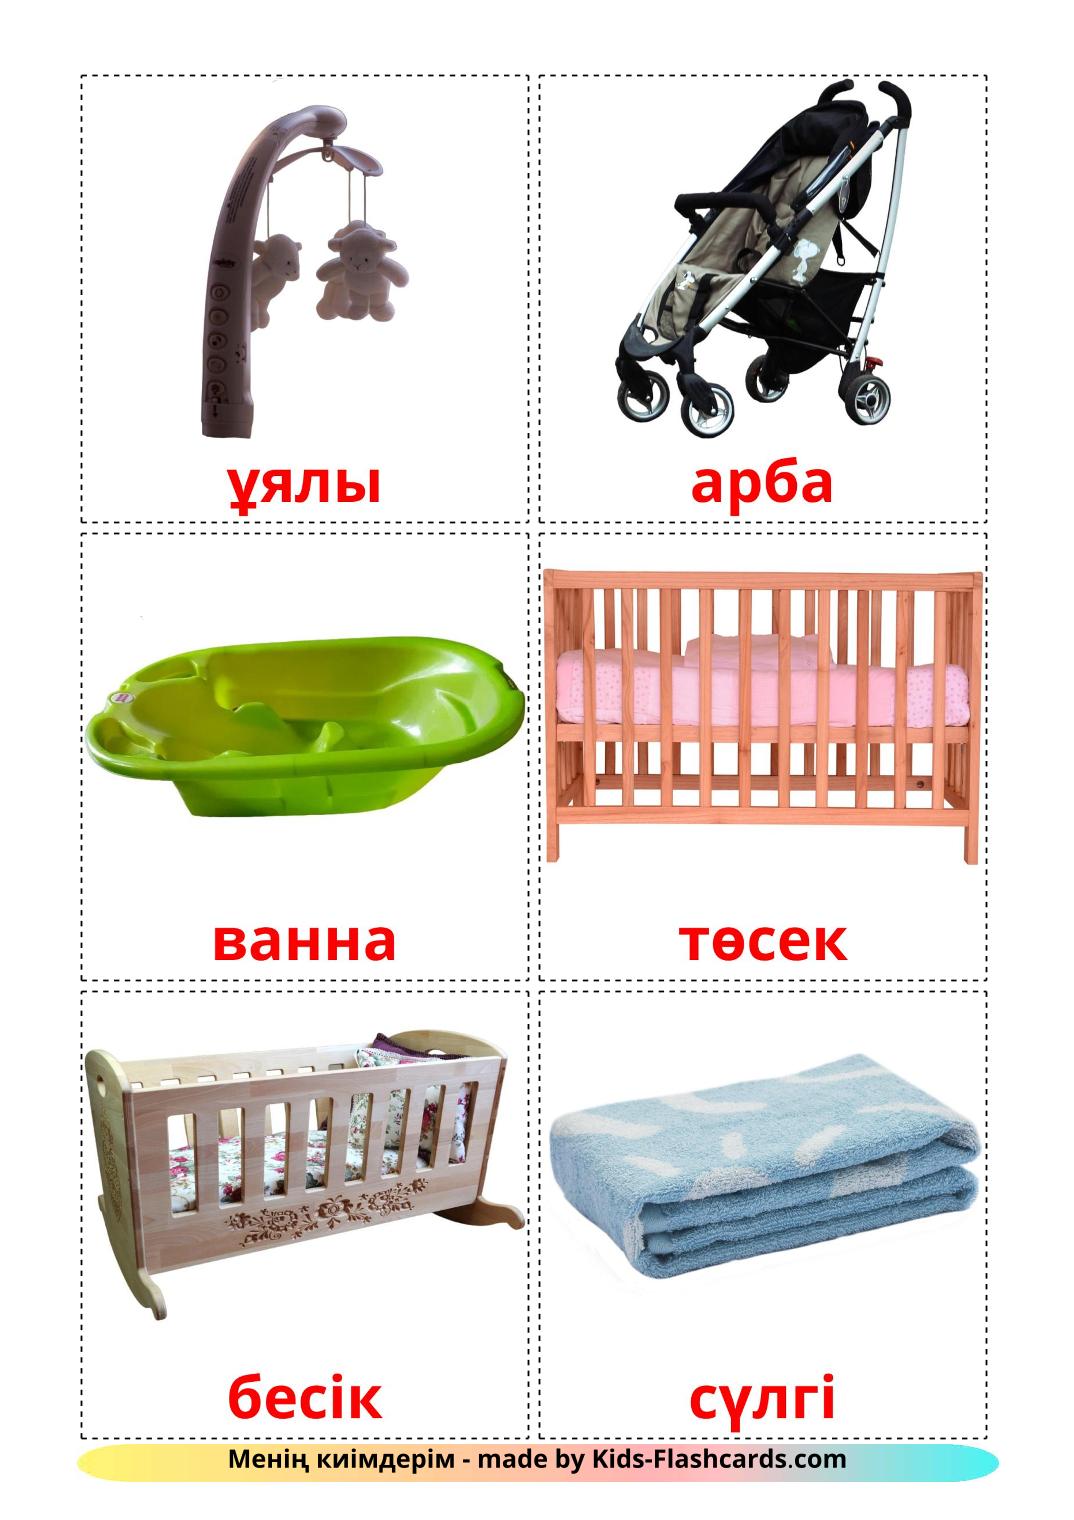 Cosas de bebés - 19 fichas de kazajo para imprimir gratis 